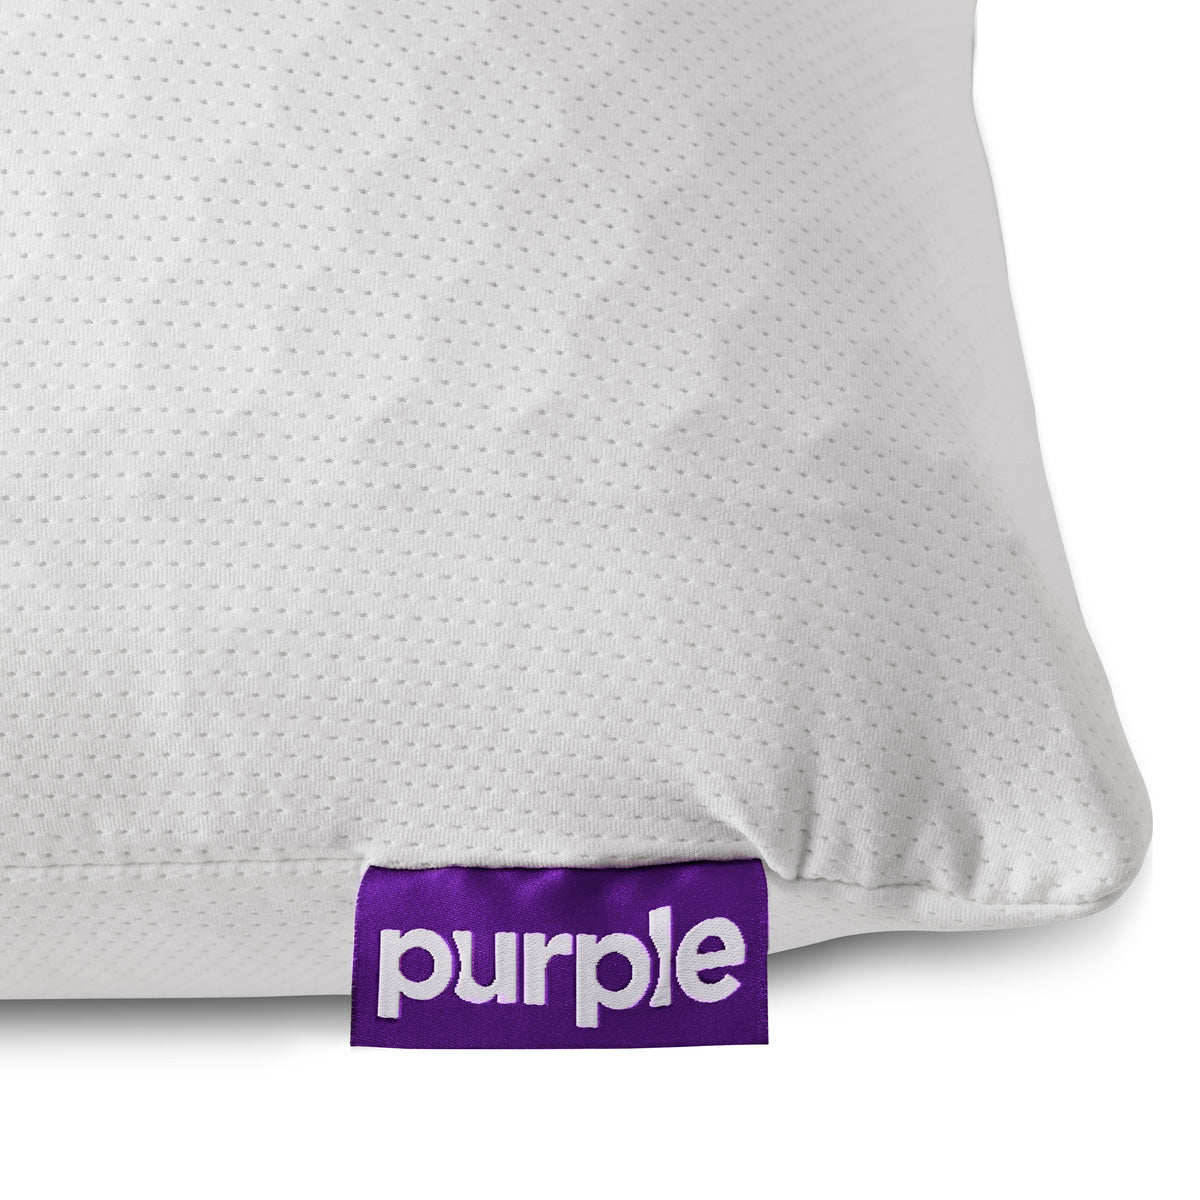 Purple Harmony Pillow Tag Detail Shot Showcasing The Purple Logo